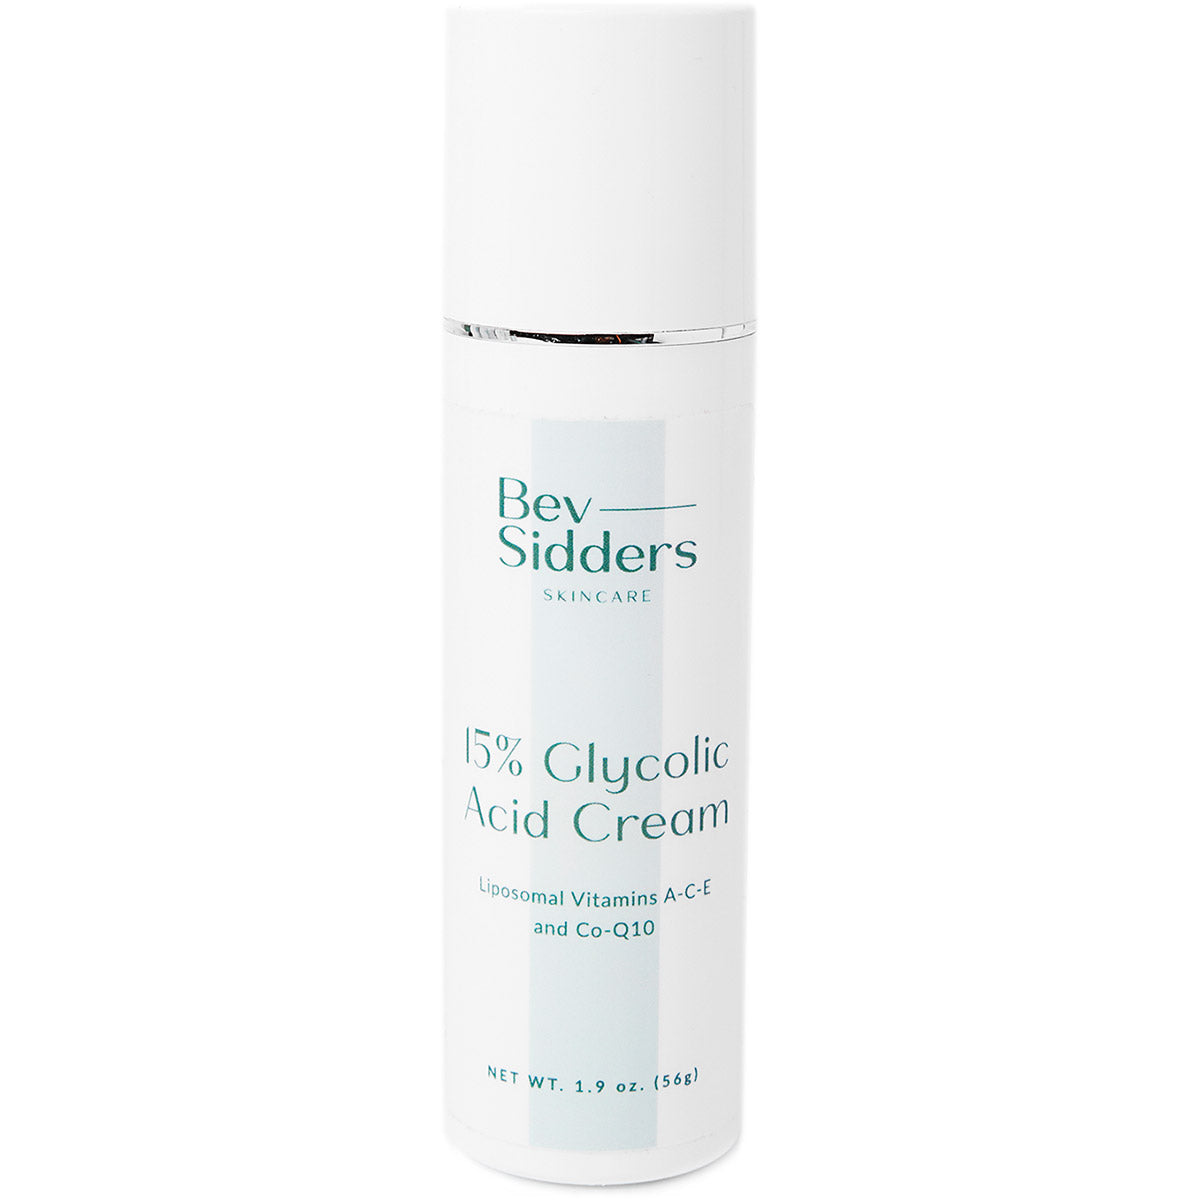 15% Glycolic Acid Cream | Bev Sidders Skincare